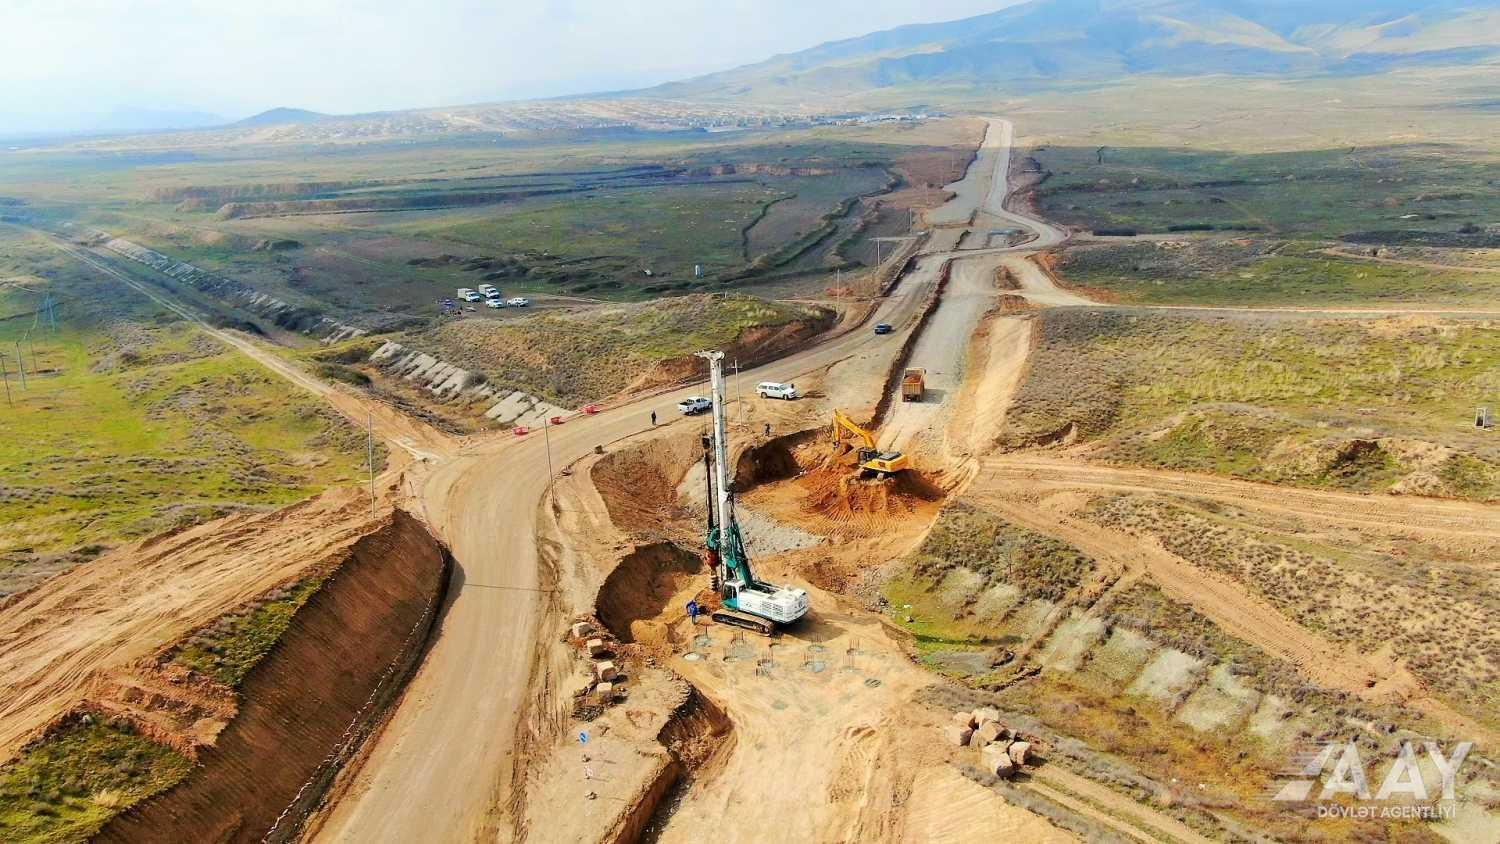 Construction of Askeran highway started [PHOTOS]